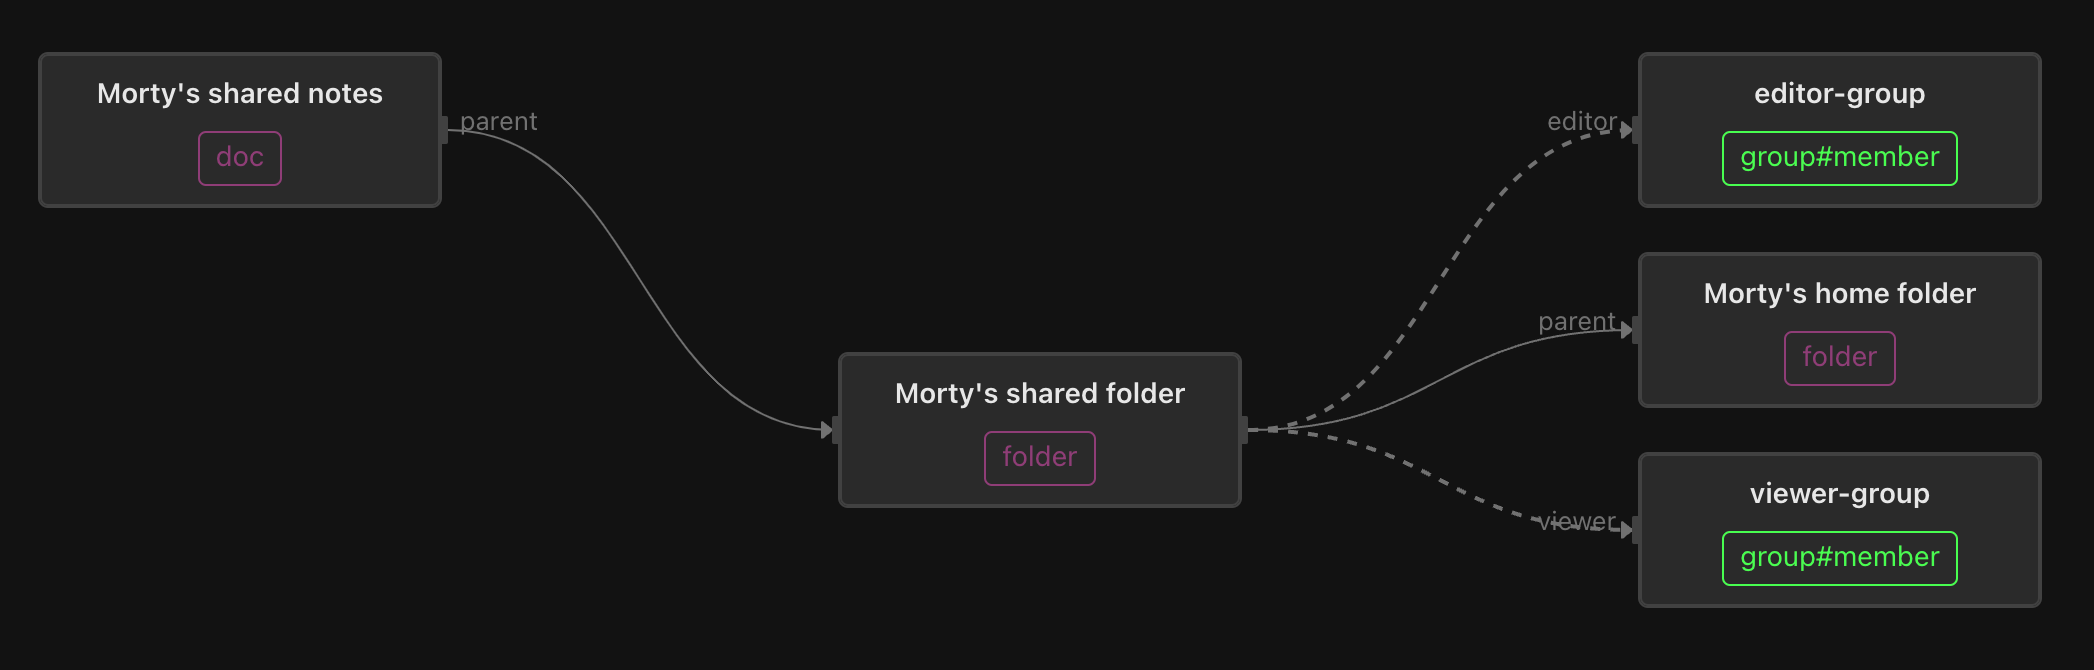 morty shared folder